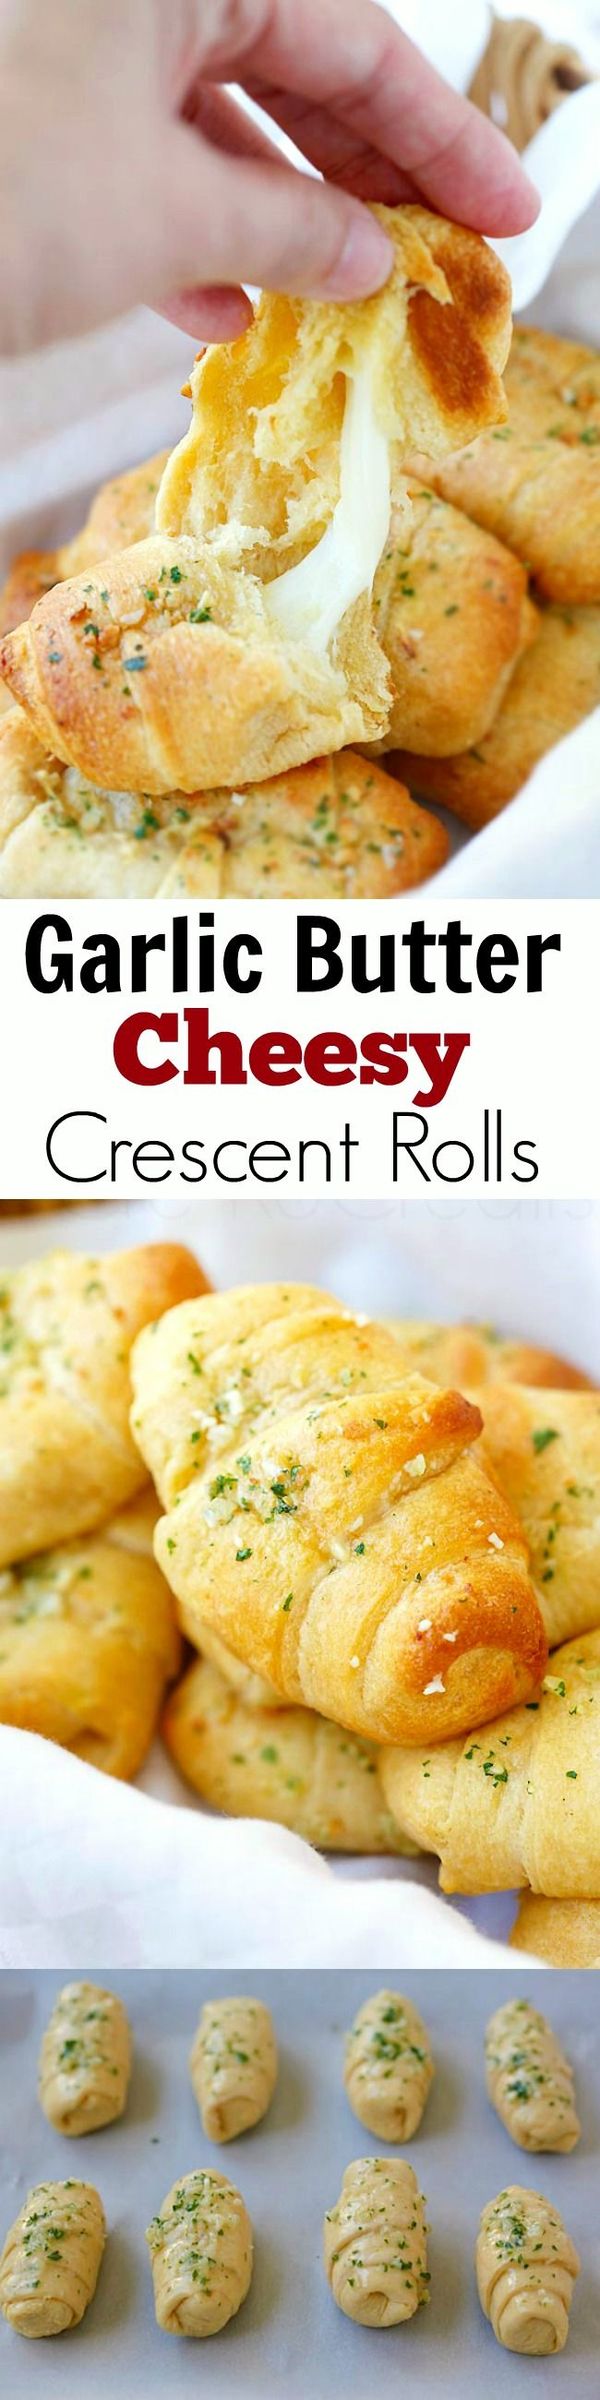 Garlic Butter Cheesy Crescent Rolls